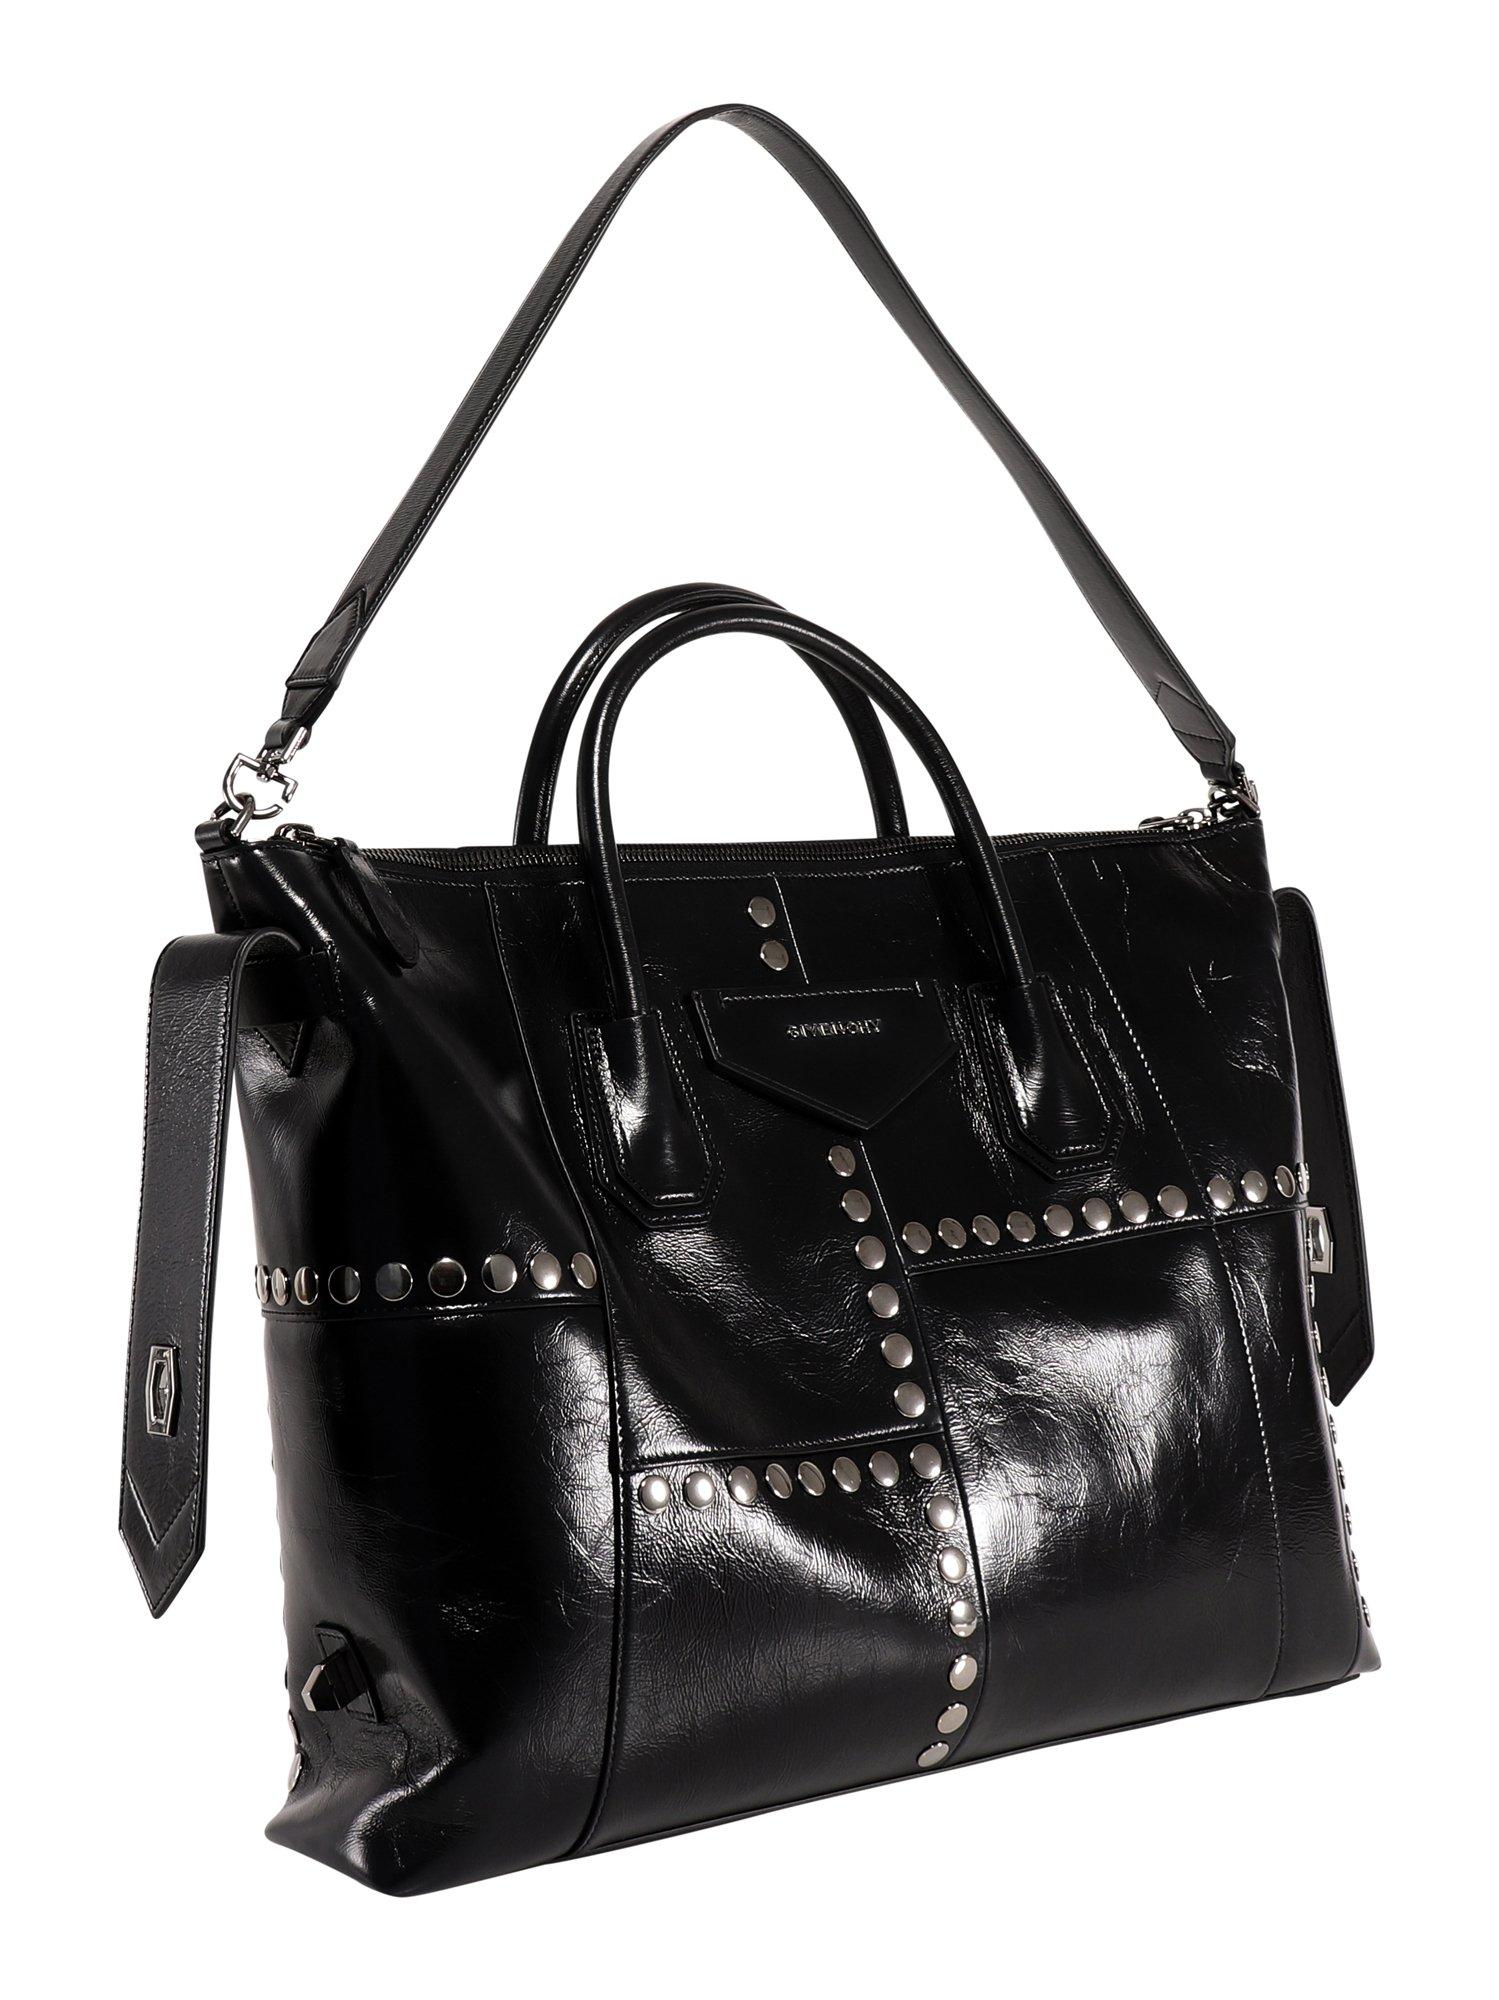 Givenchy Antigona Soft Medium Leather Bag - Bergdorf Goodman